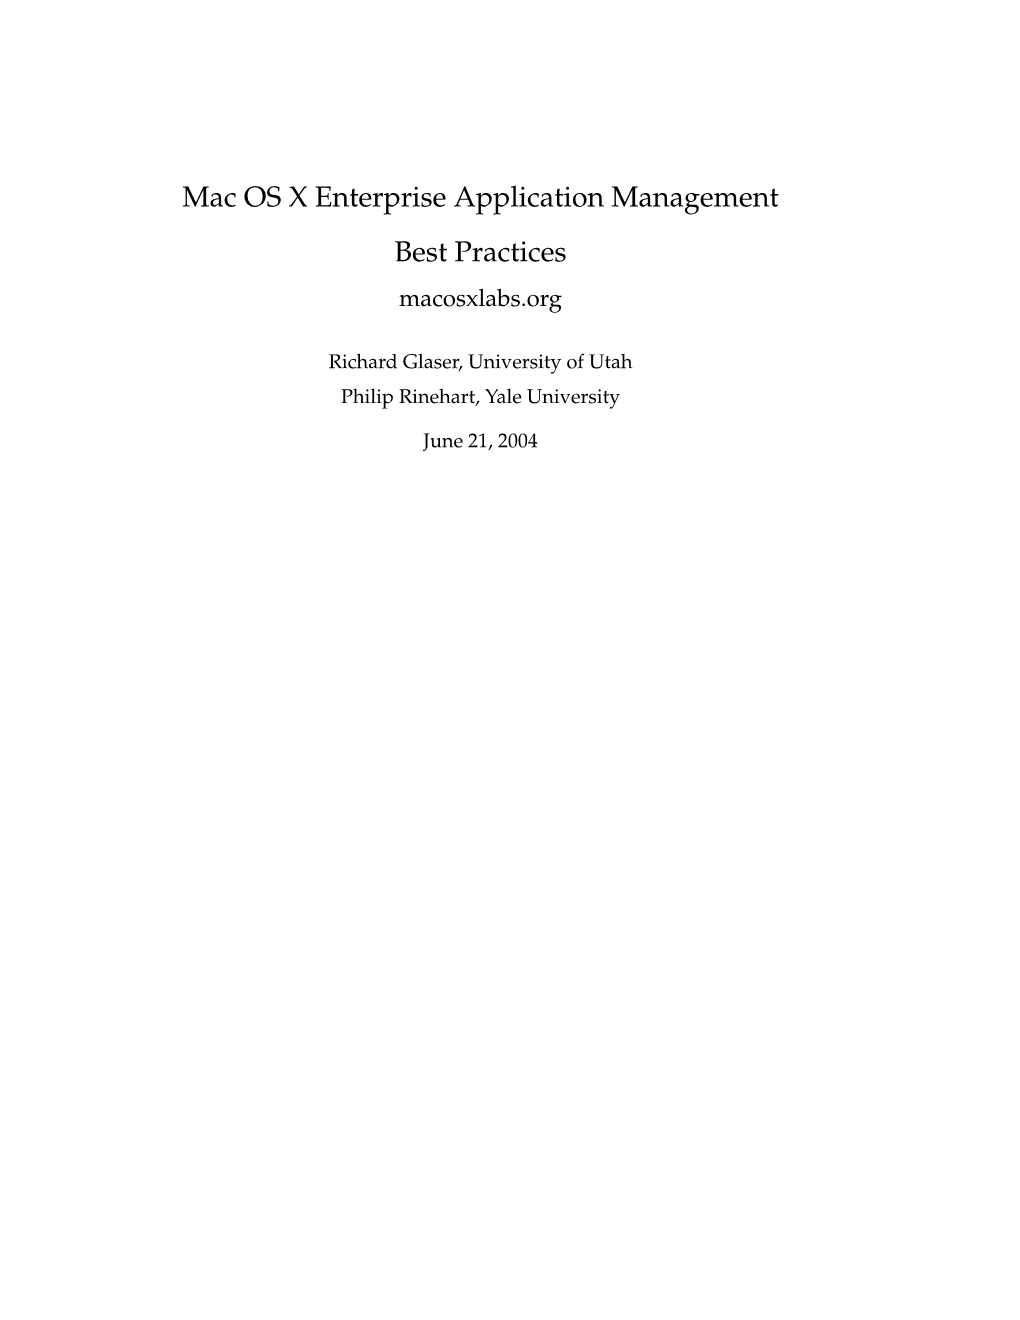 Mac OS X Enterprise Application Management Best Practices Macosxlabs.Org